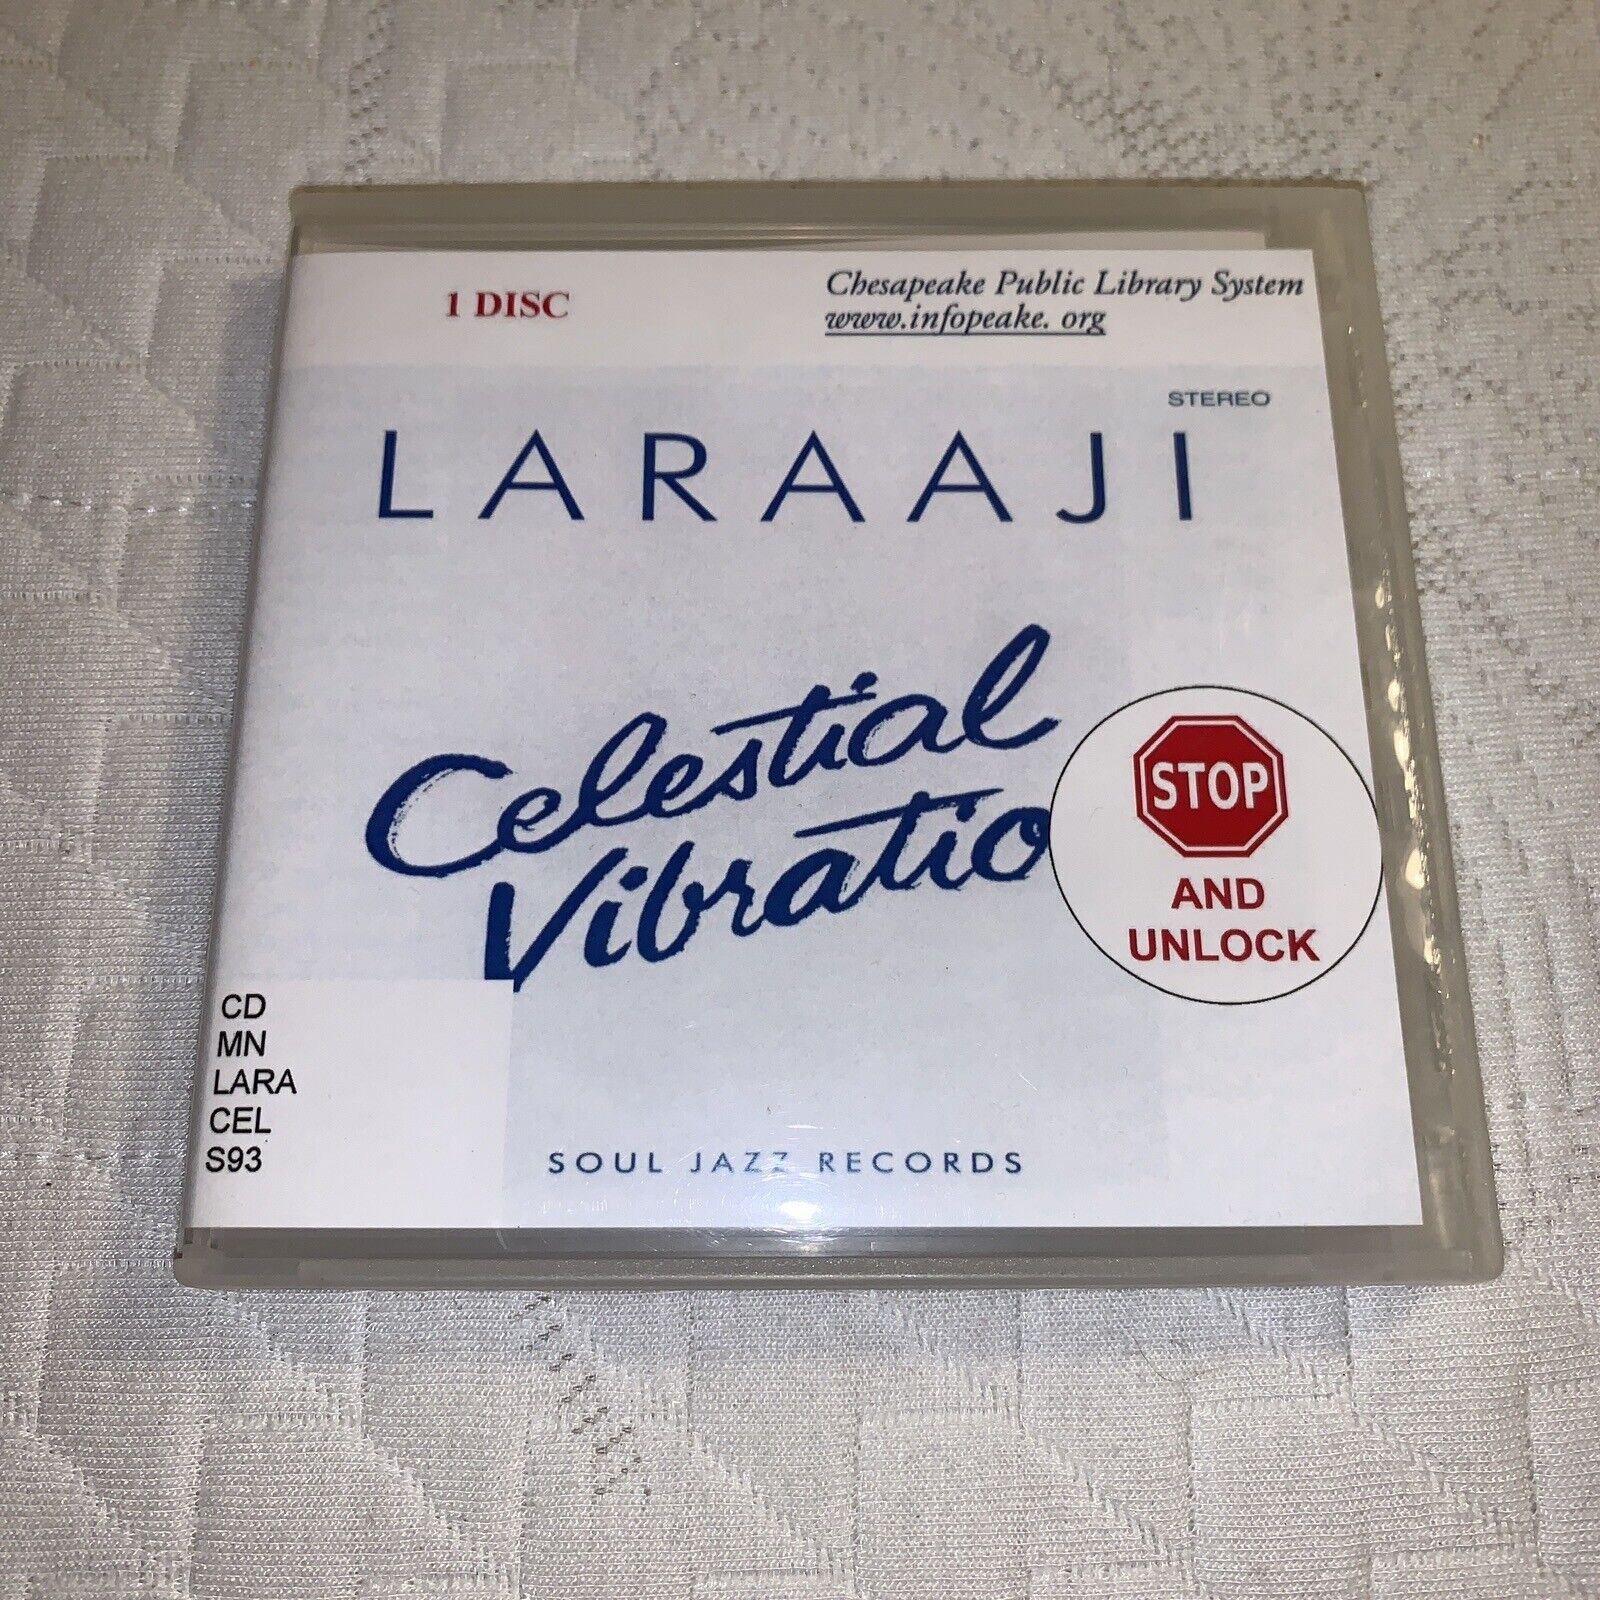 Edward Larry Gordon Celestial Vibration  (CD)  Album (UK IMPORT) 